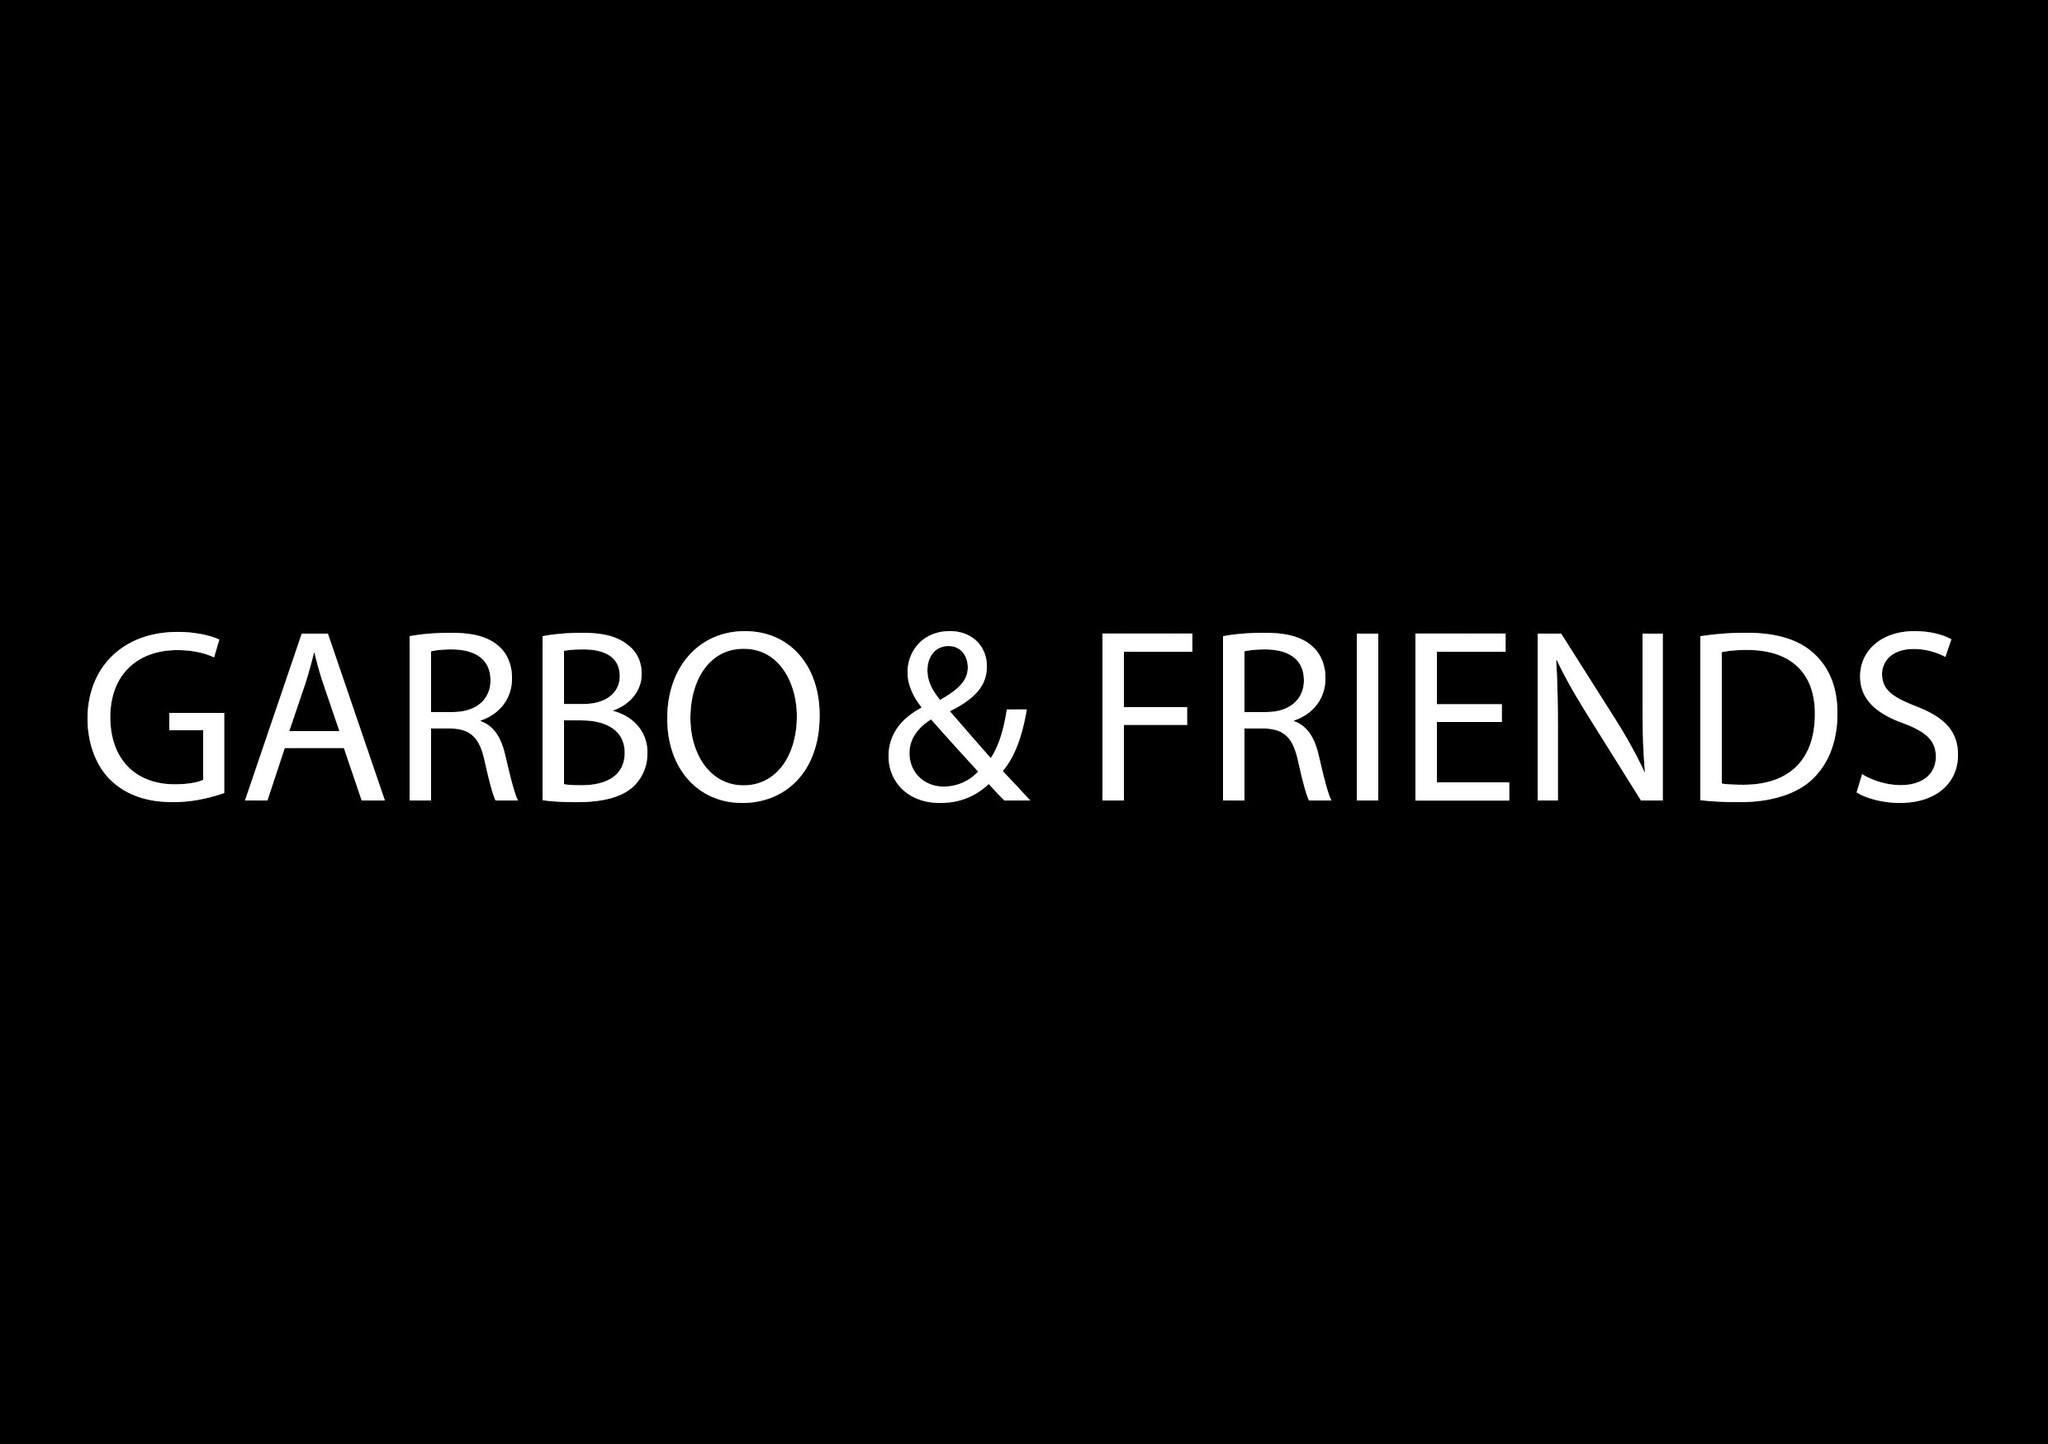 Garbo & Friends